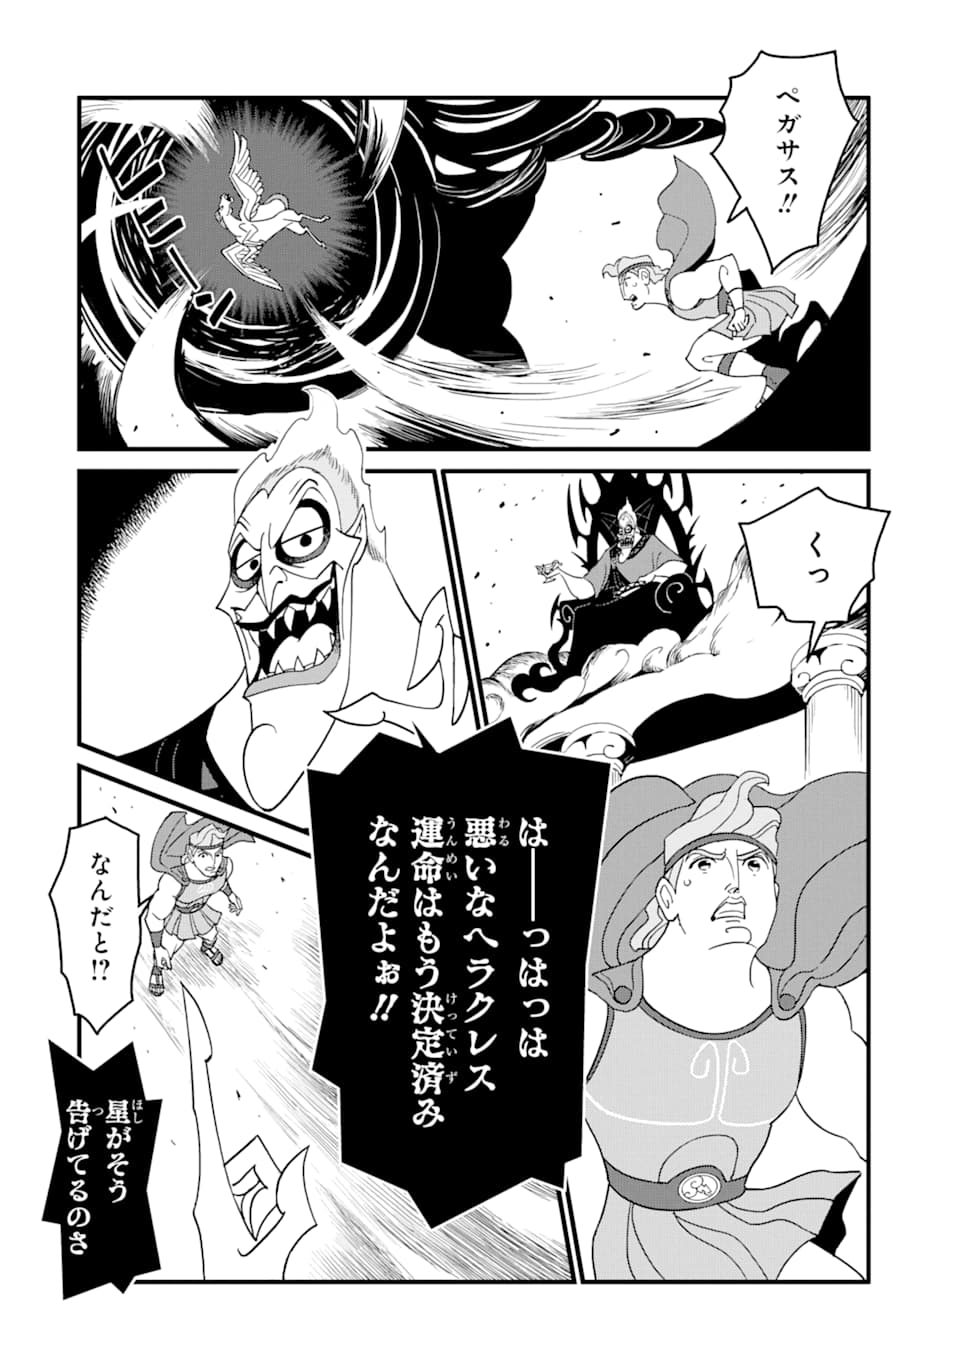 Kingdom Hearts III - Chapter 7 - Page 2